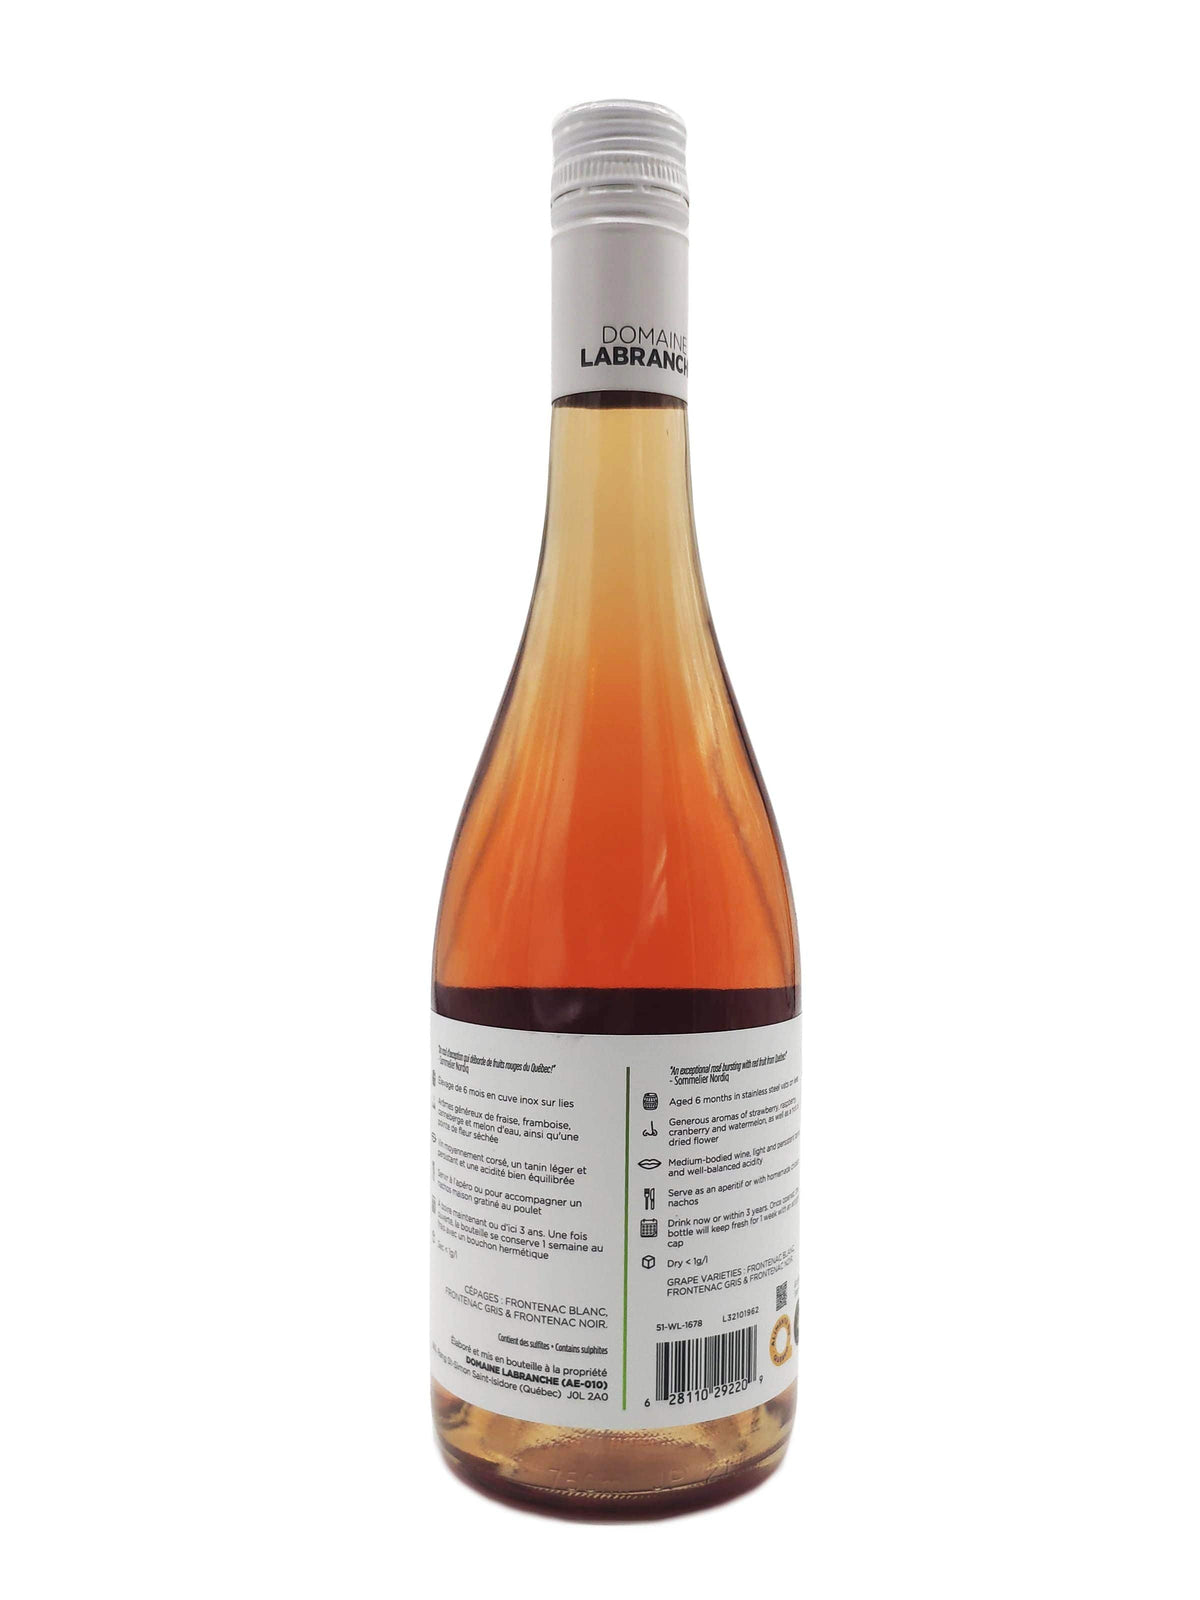 Vin rouge Frontenac-Petite Perle 2021 - Vignoble Val Caudalies